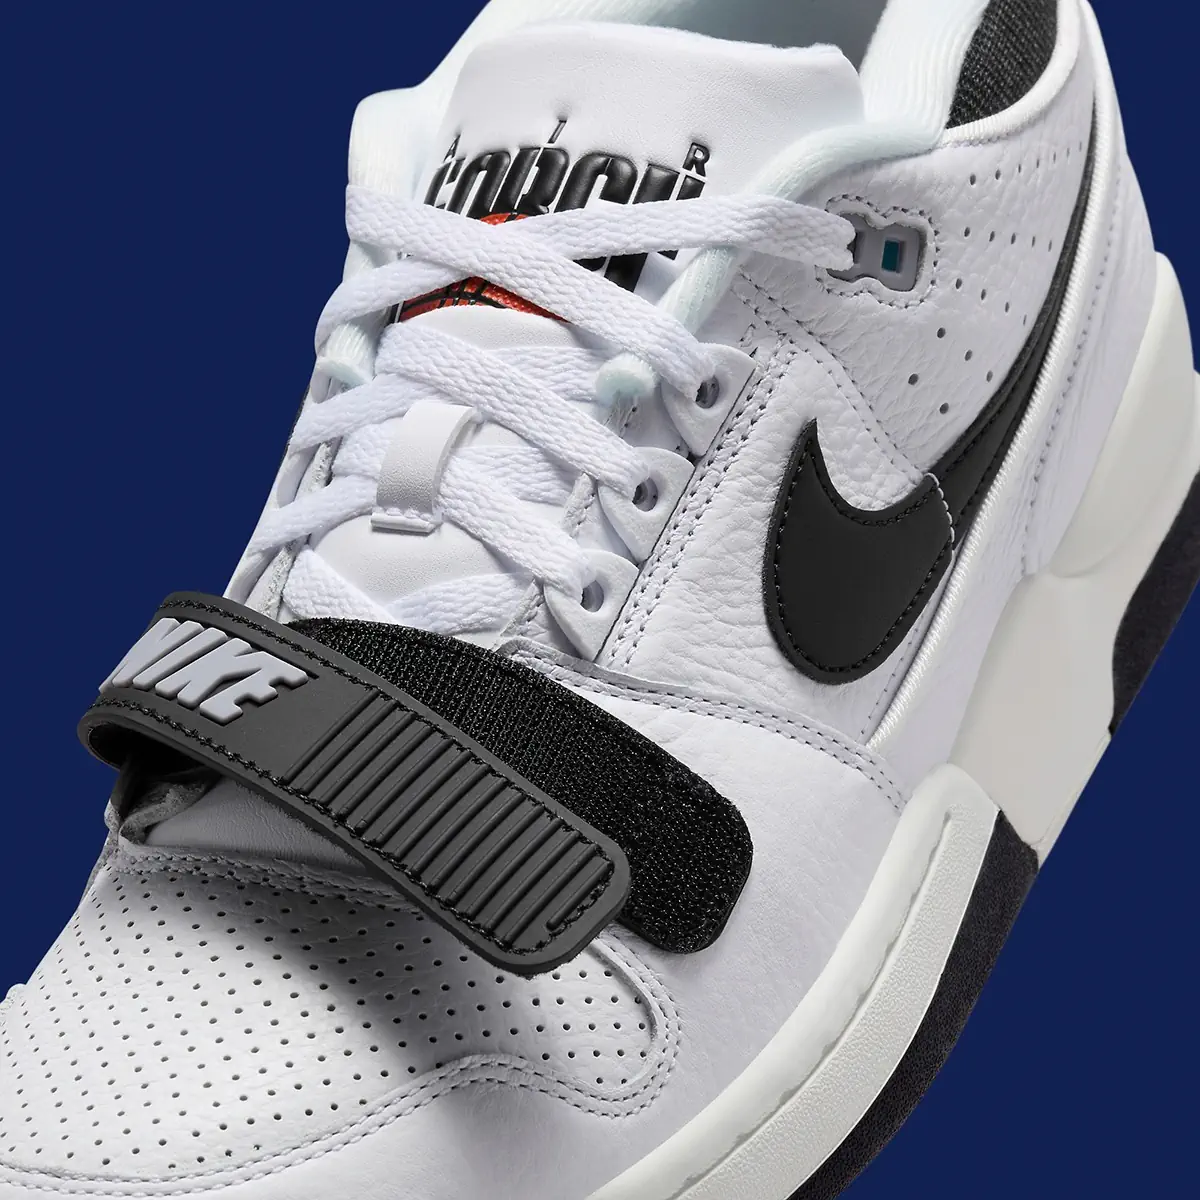 Nike Alpha Force 88 "Black/White", A Timeless Classic Returns